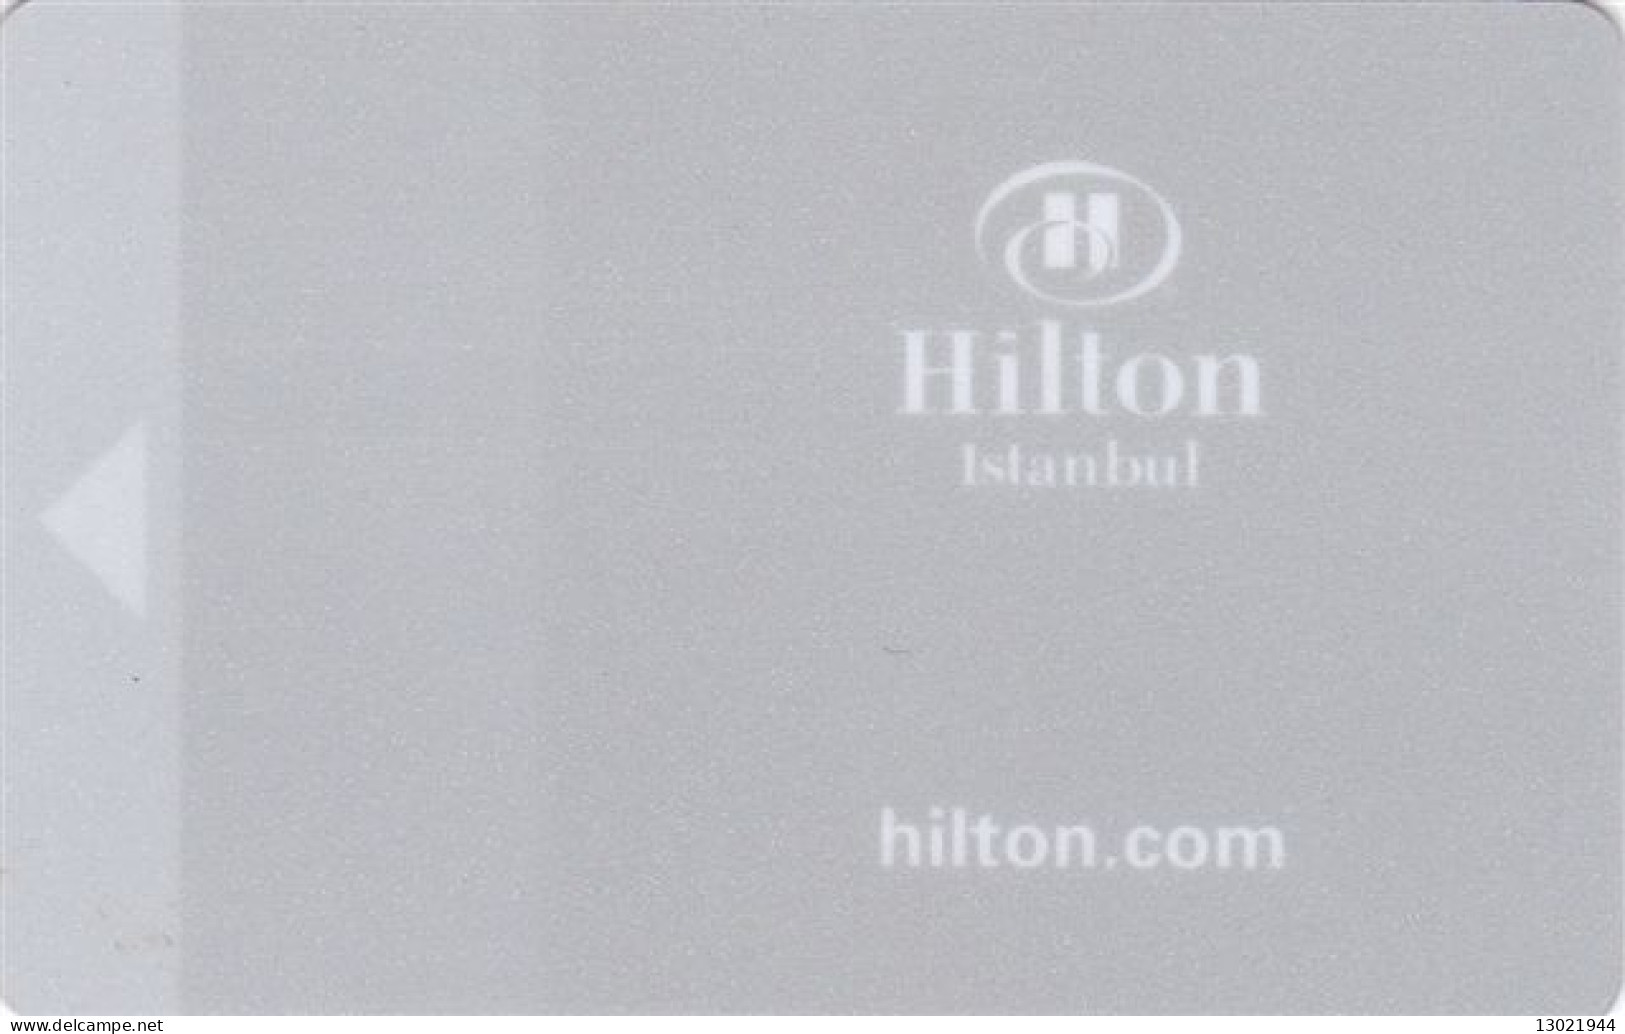 TURCHIA   KEY HOTEL  Hilton Istanbul 3 - Chiavi Elettroniche Di Alberghi